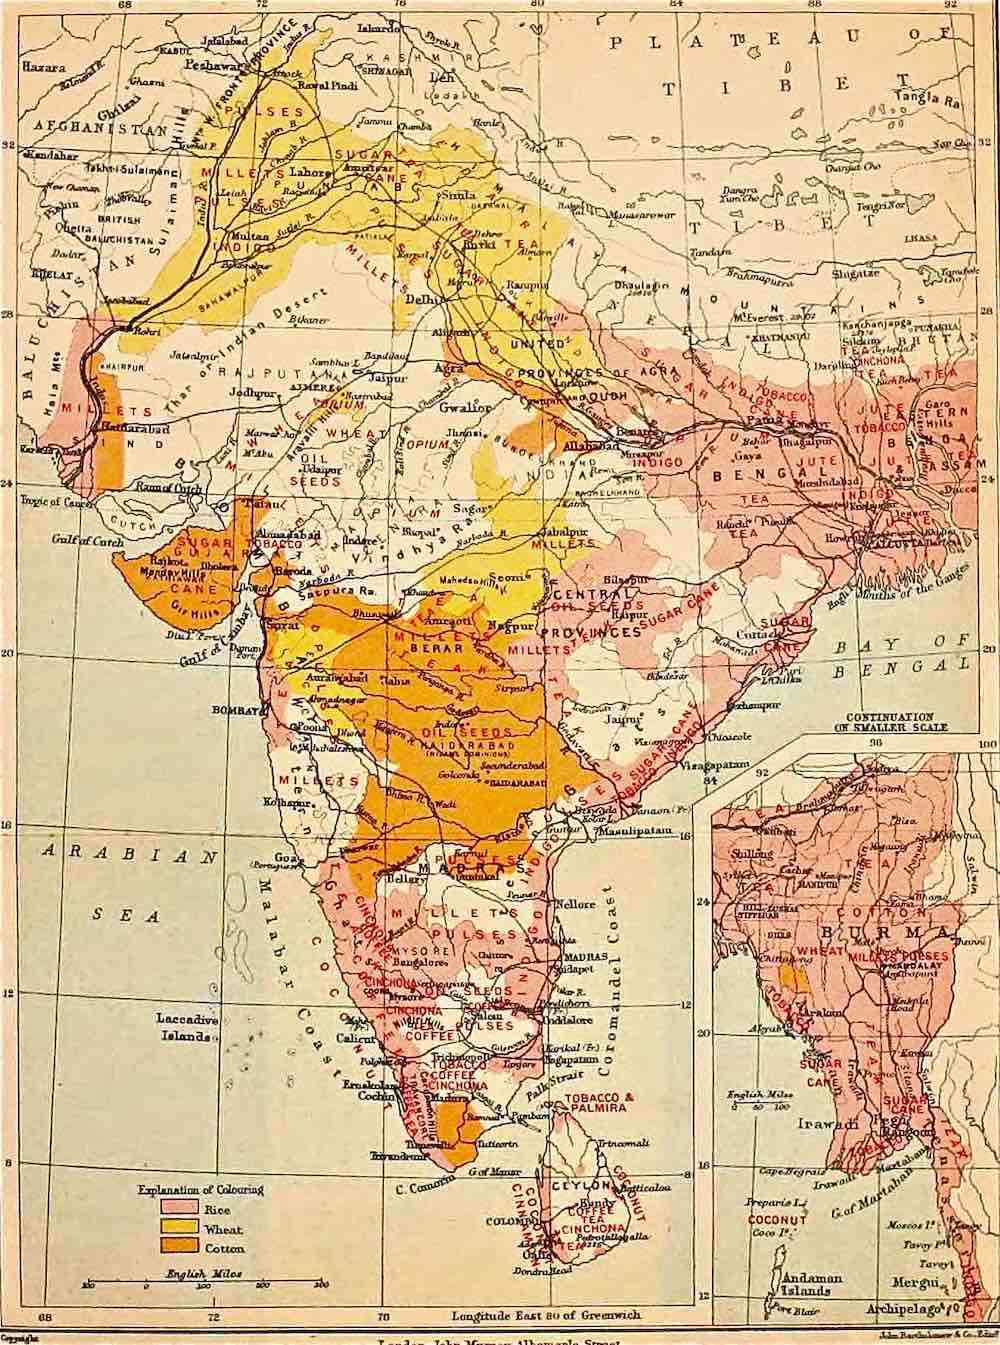 1911_Map_of_British_India_showing_crop_land_dedicated_to_opium_jute_indigo_sugarcane_and_other_crops